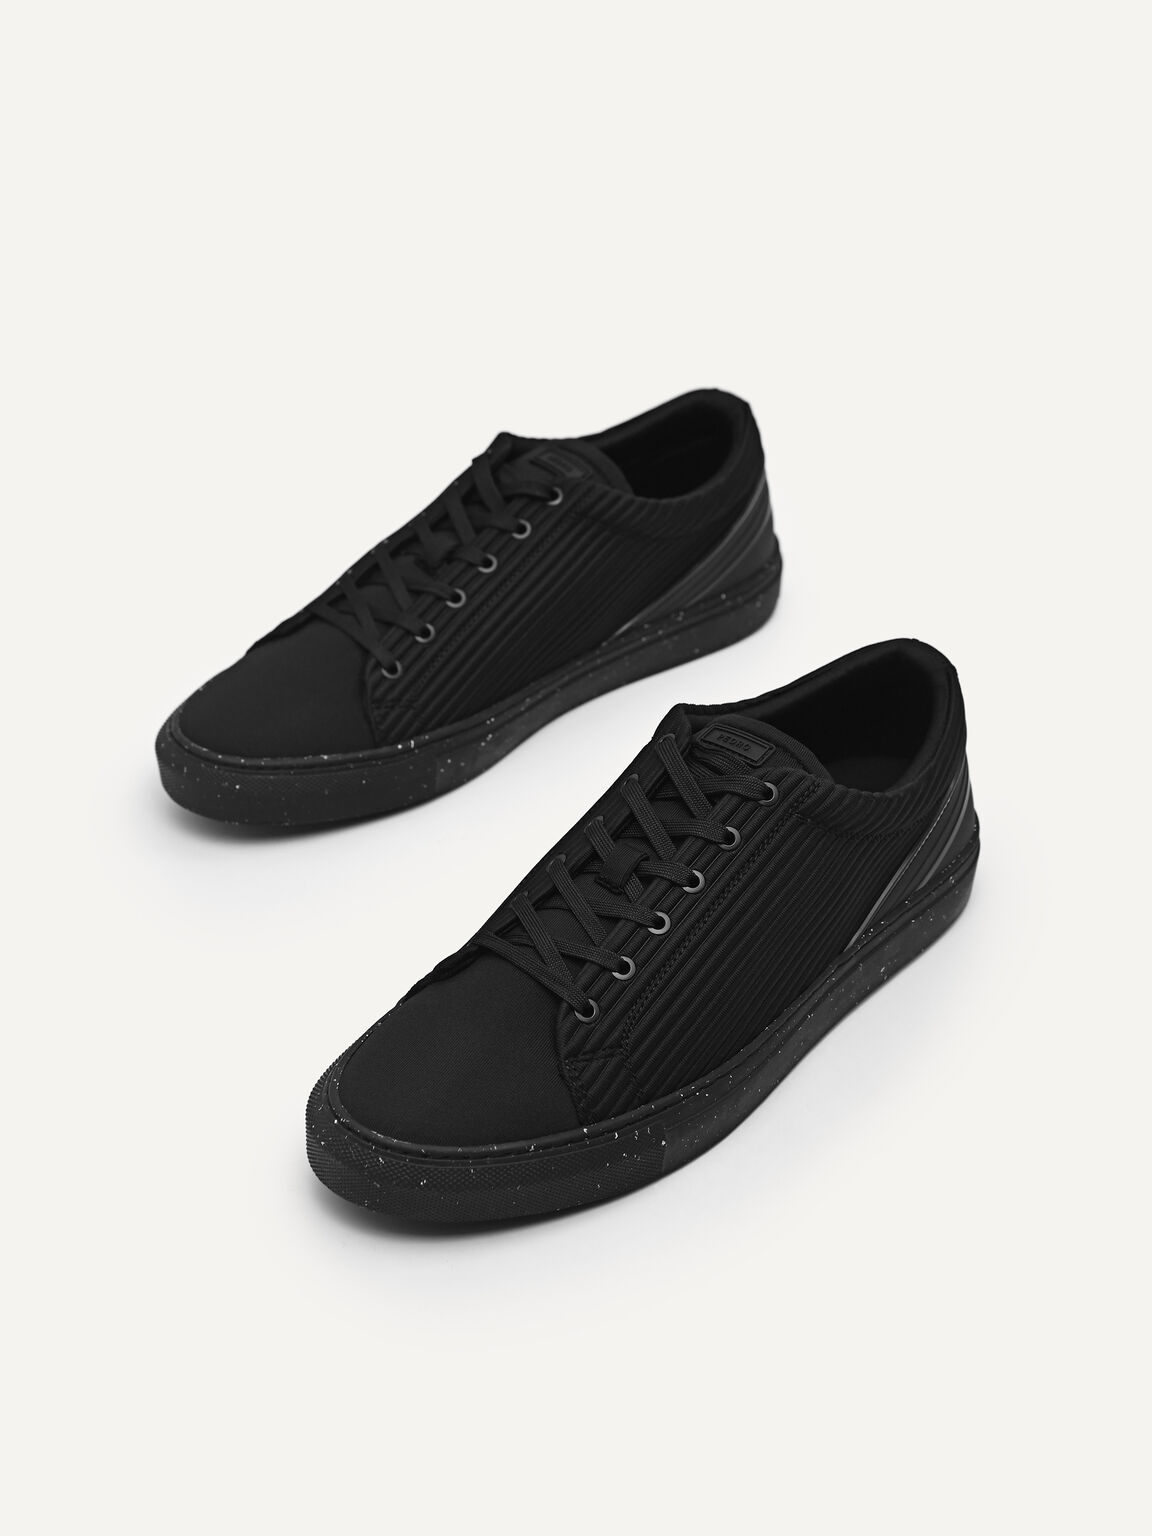 rePEDRO Pleated Sneakers, Black, hi-res